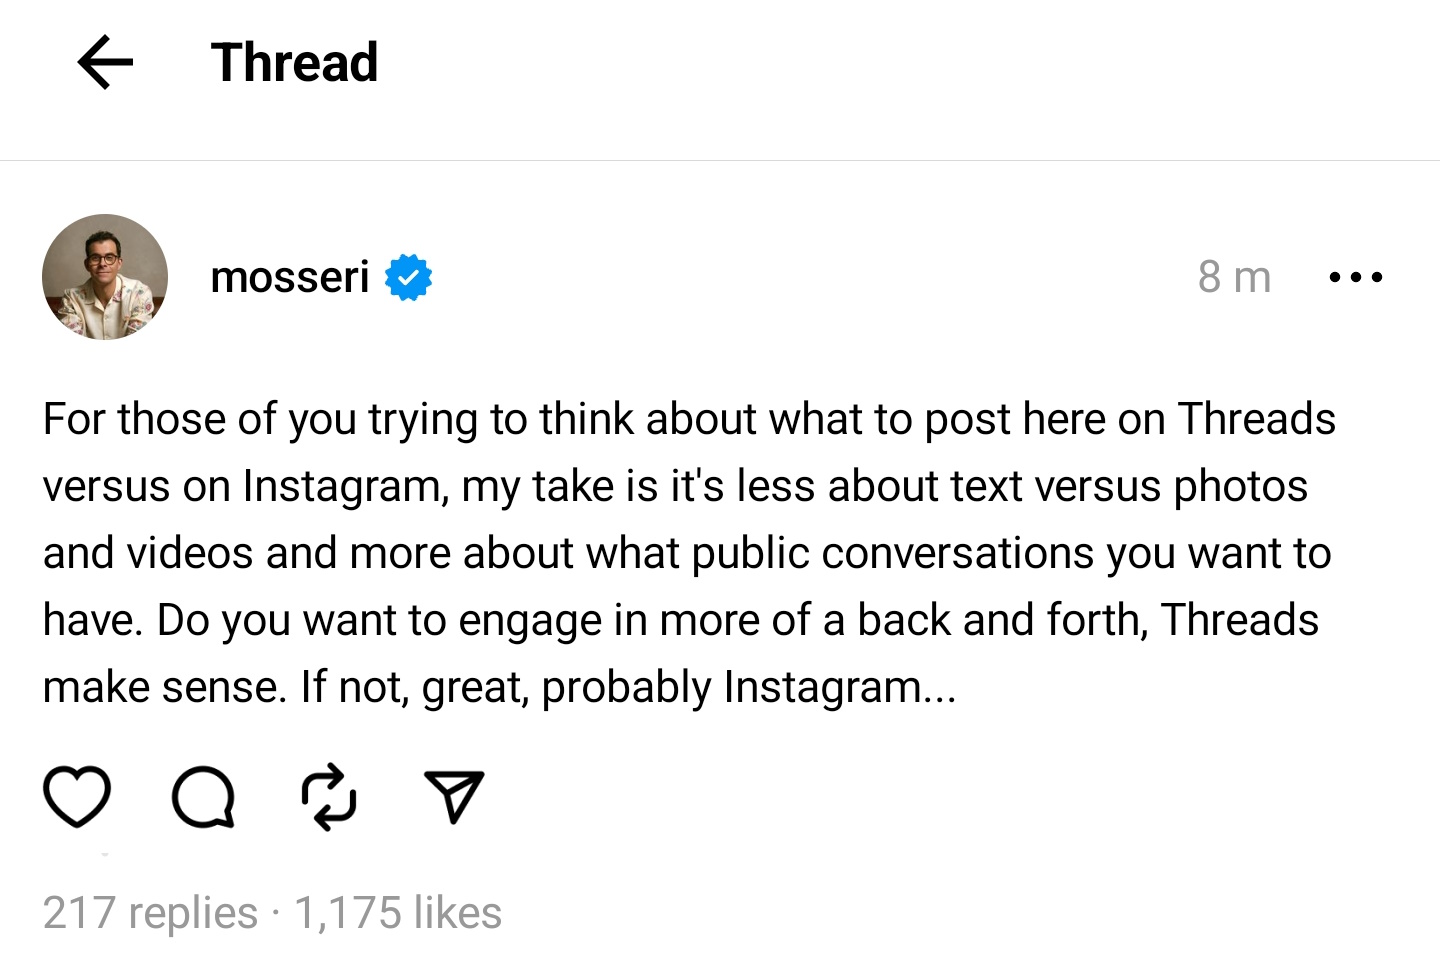 Adam Mosseri on Instagram vs Threads